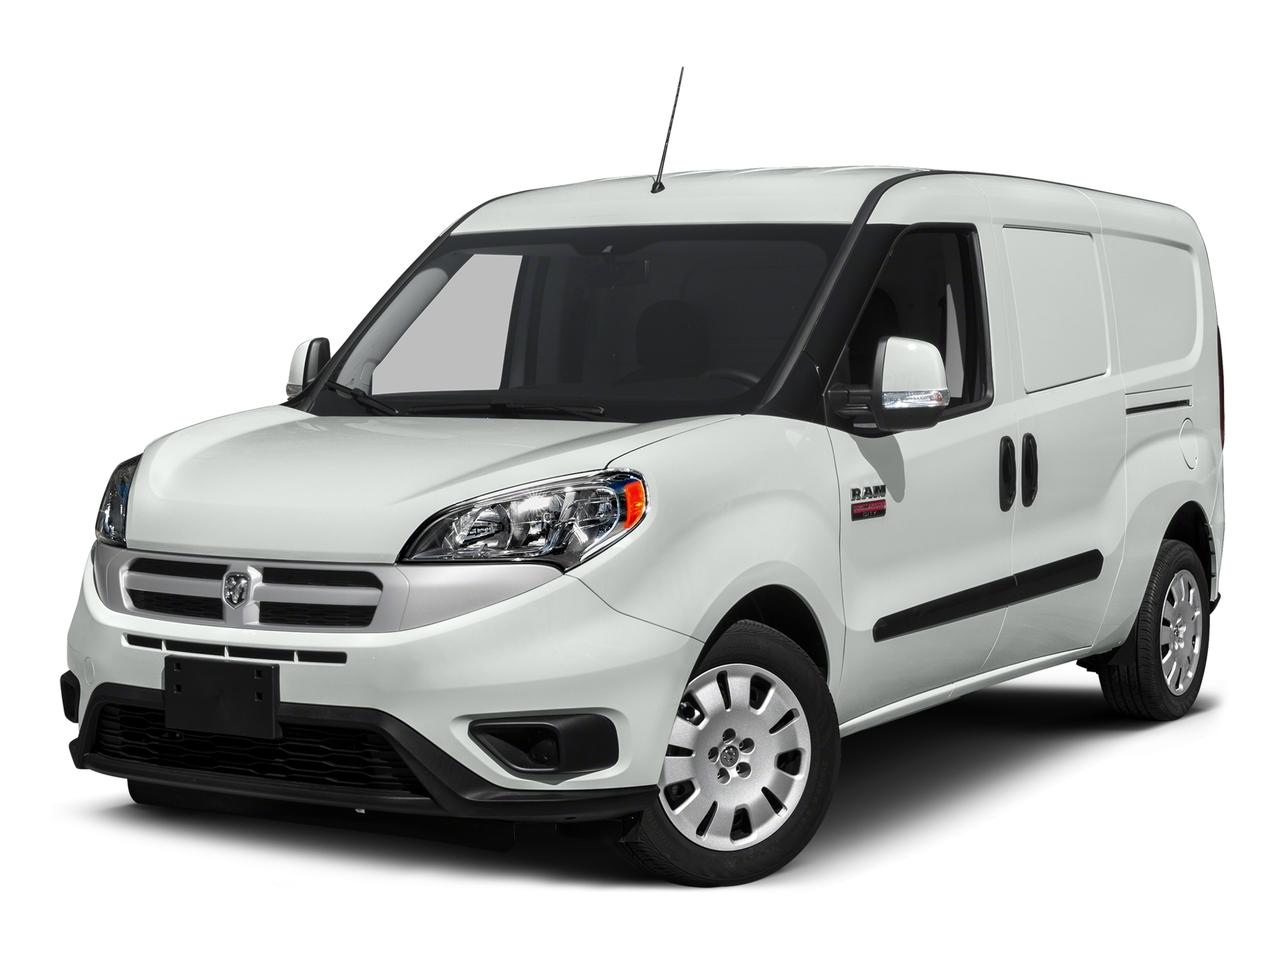 2015 Ram ProMaster City Cargo Van for Sale in Fairfield - ZFBERFAT8F6A30009  - Paul Miller Nissan